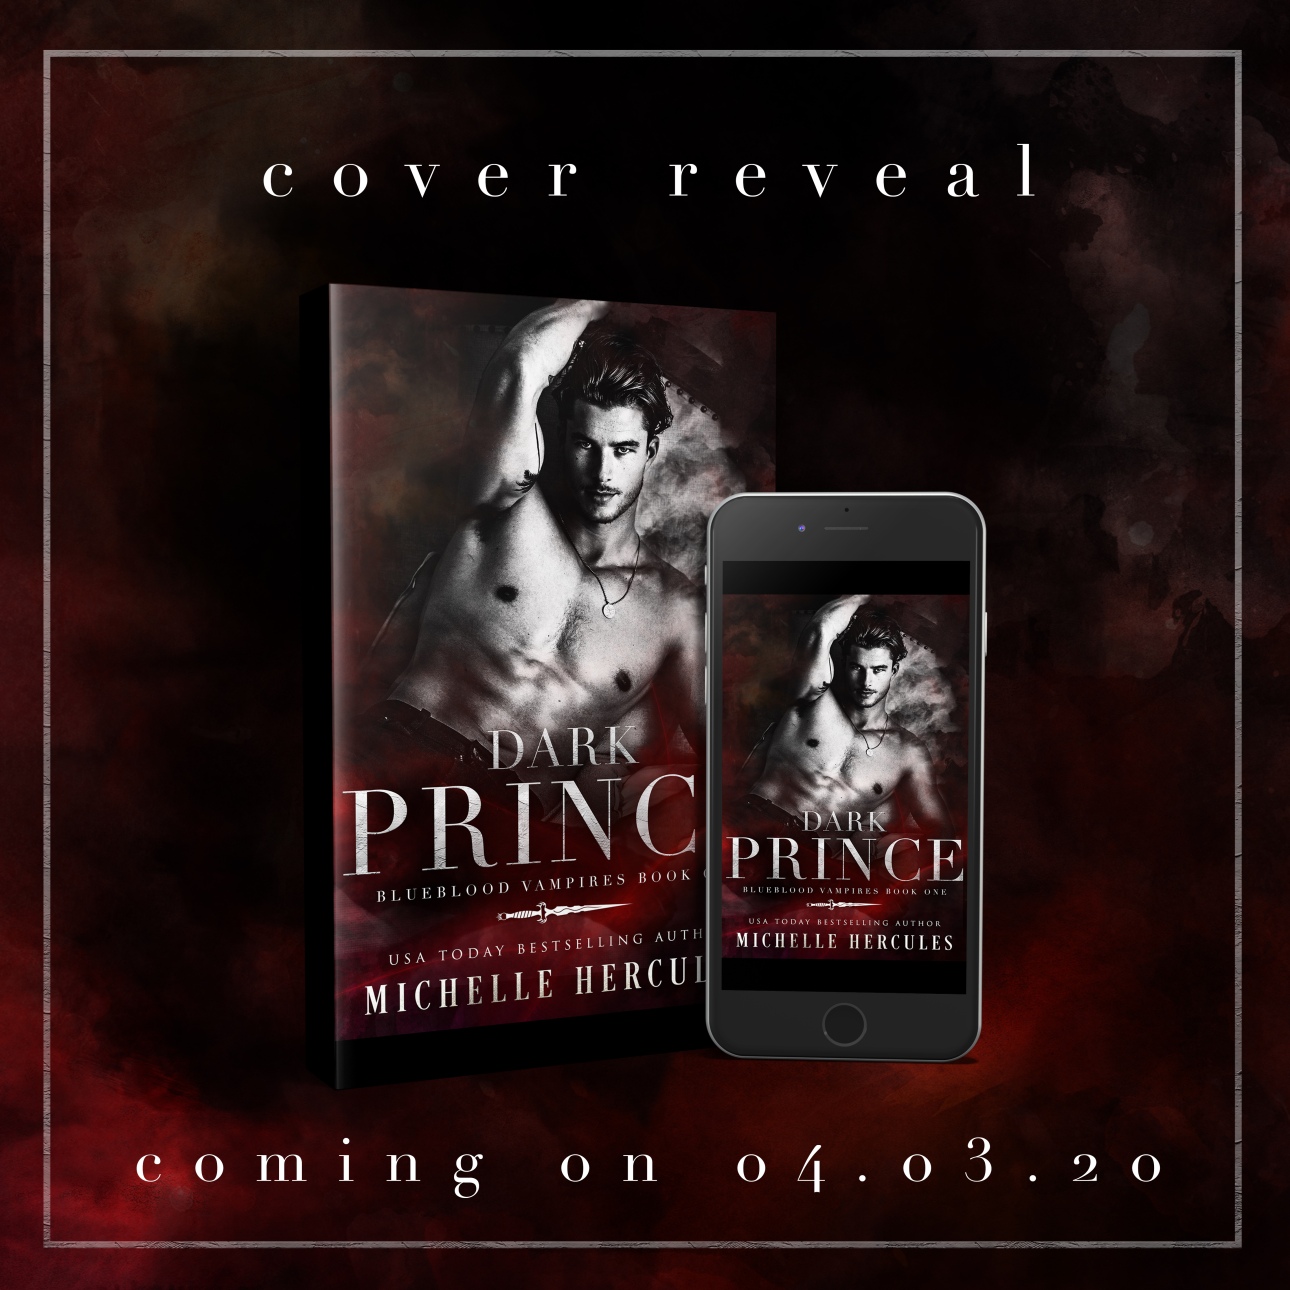 Dark Prince Cover reveal IG 3